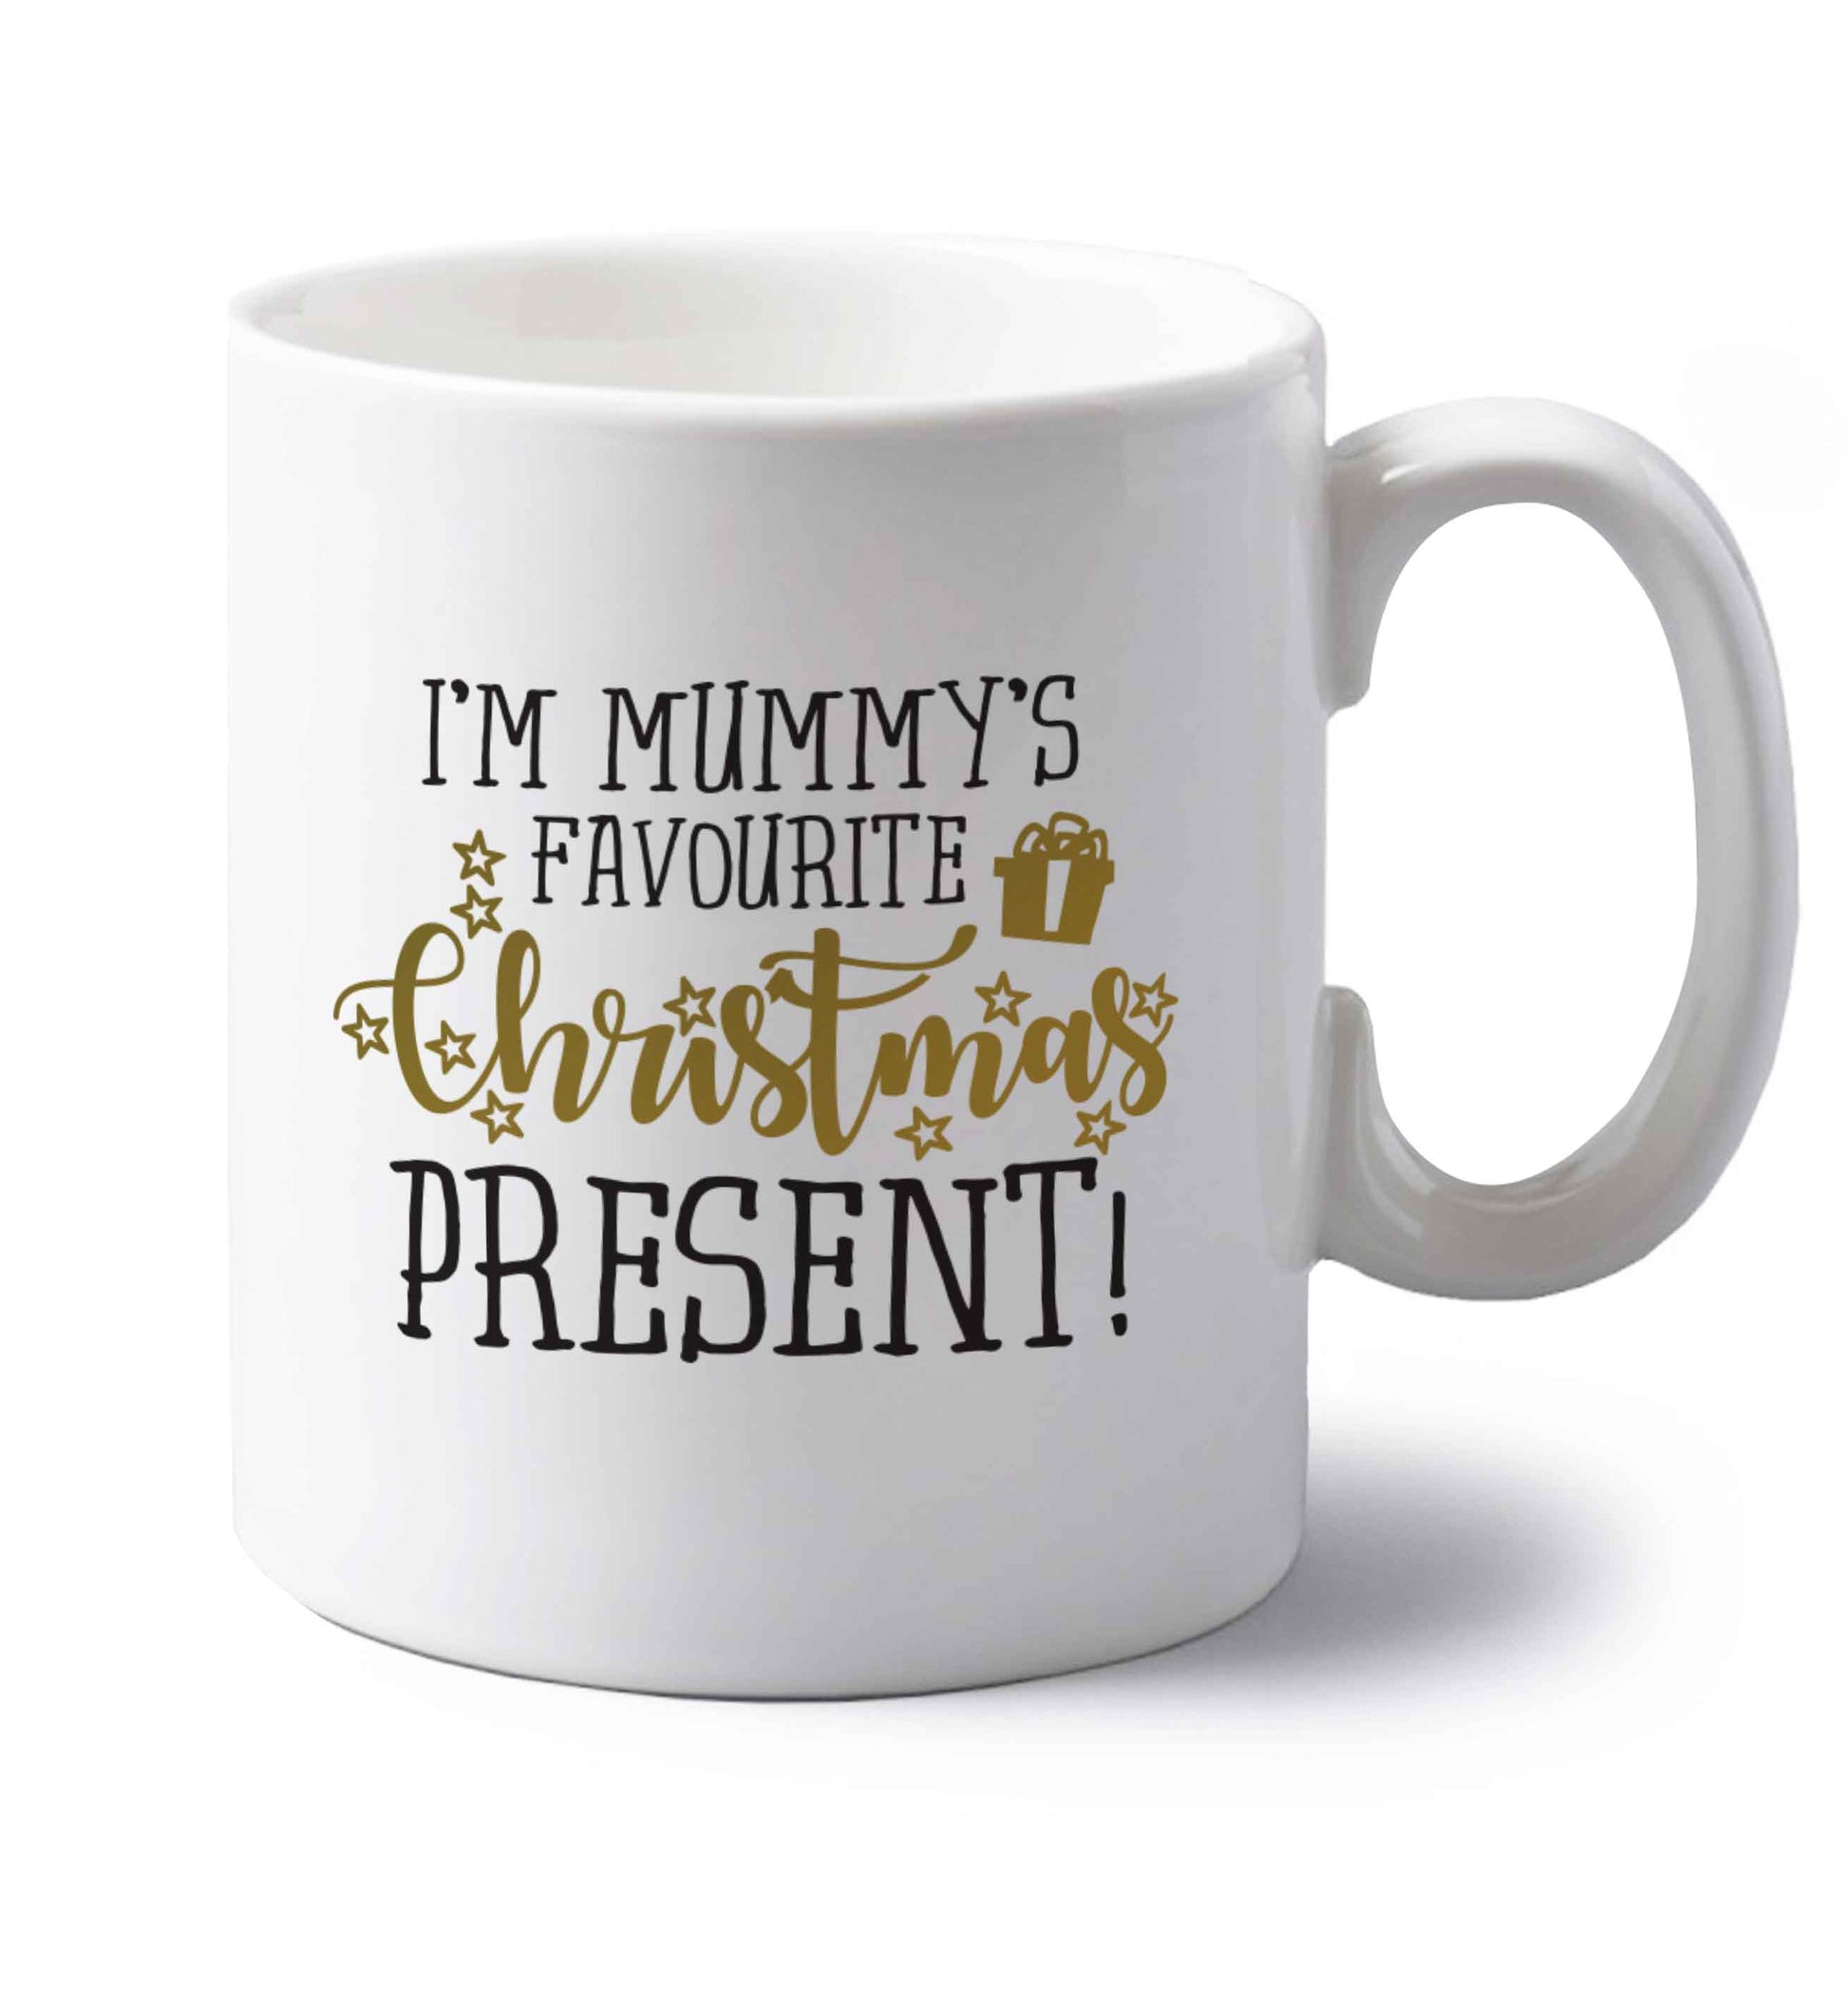 I'm Mummy's favourite Christmas present left handed white ceramic mug 